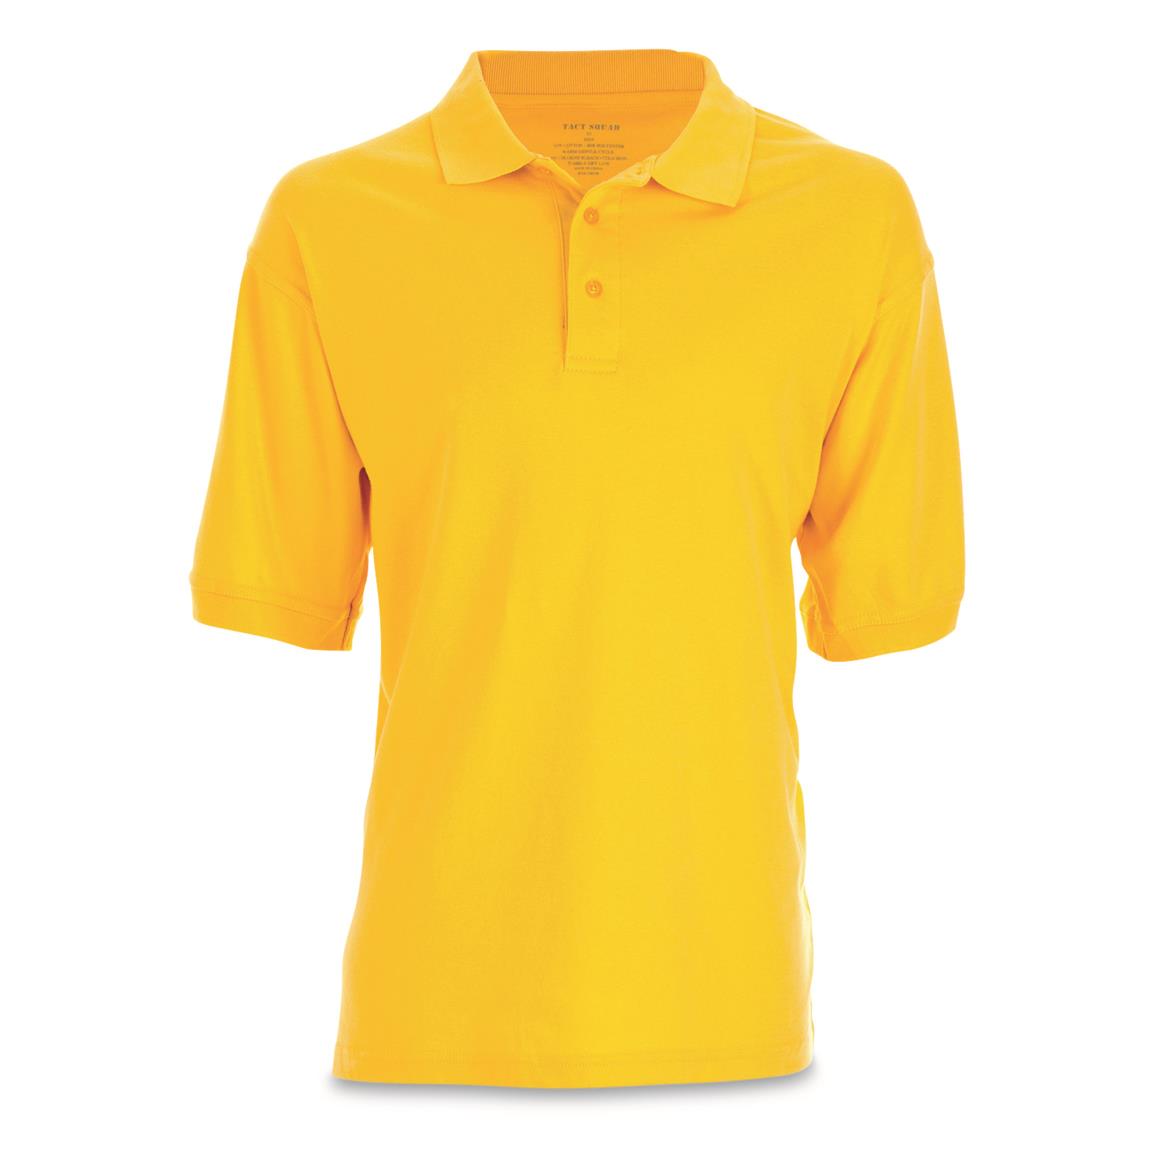 U.S. Municipal Surplus Short Sleeve Polo Shirt, New, Gold